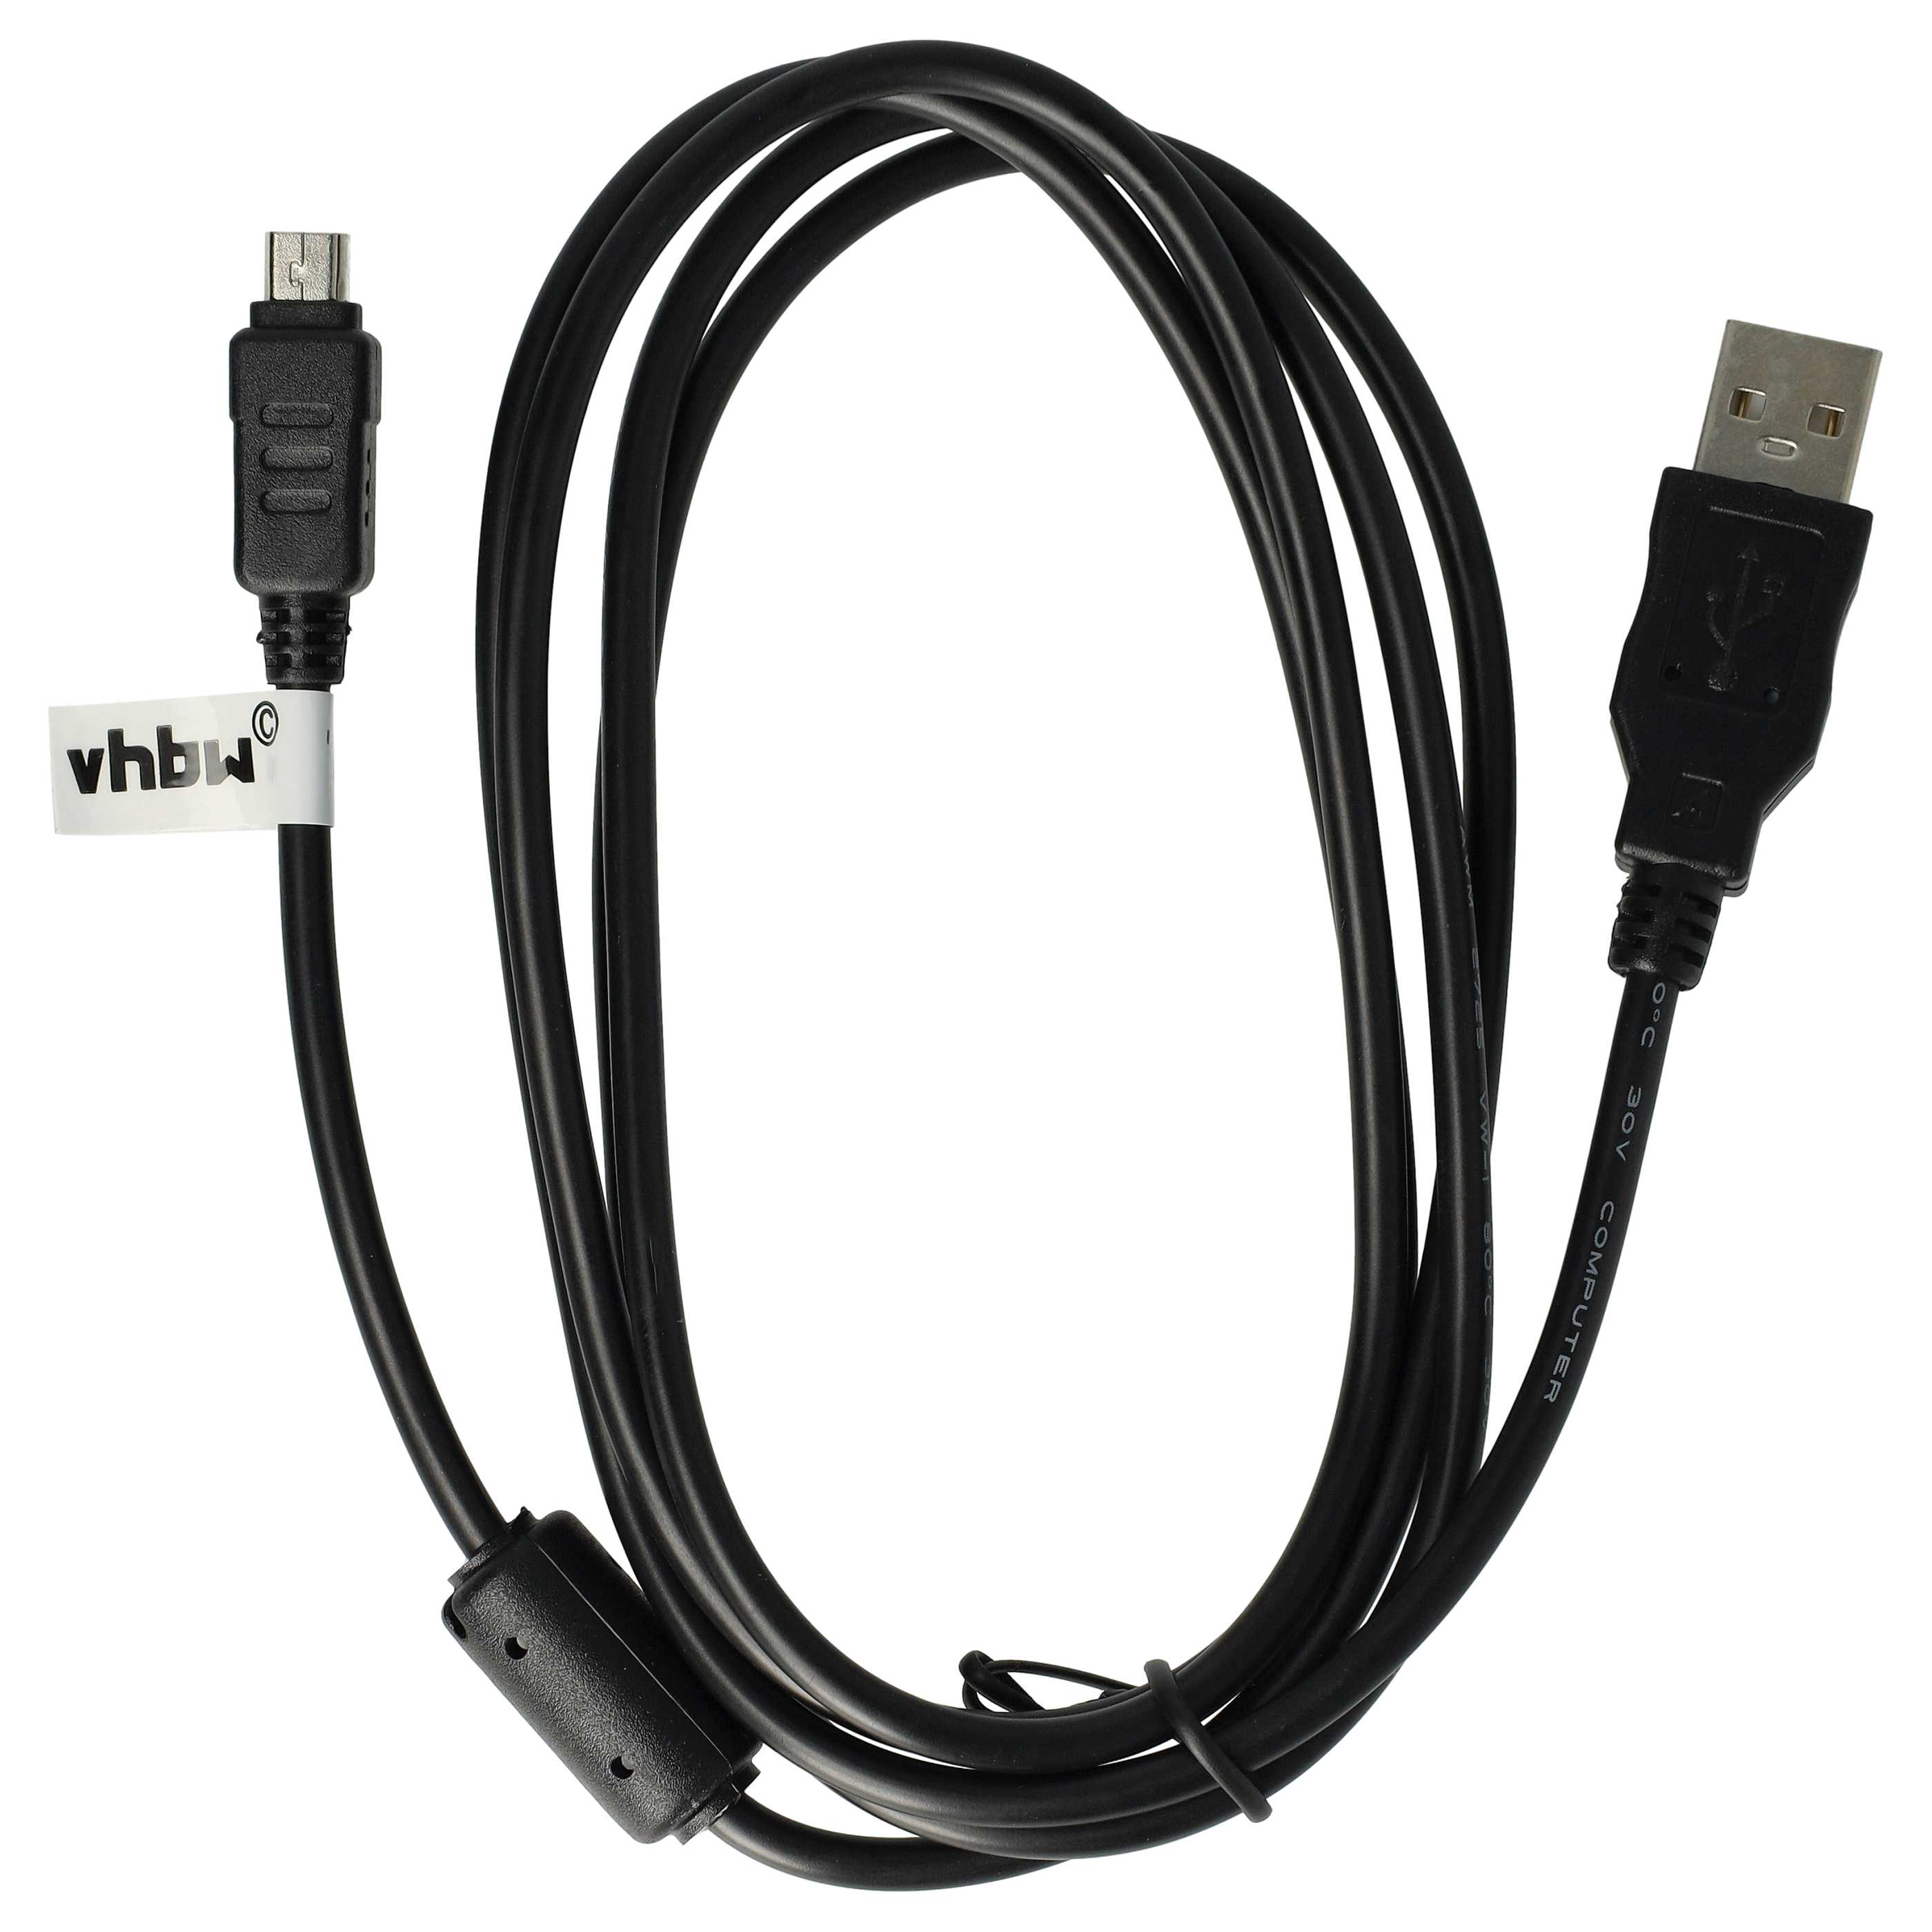 Cable de datos USB reemplaza Olympus CB-USB6, CB-USB5, CB-USB8 para cámaras Olympus - 150 cm